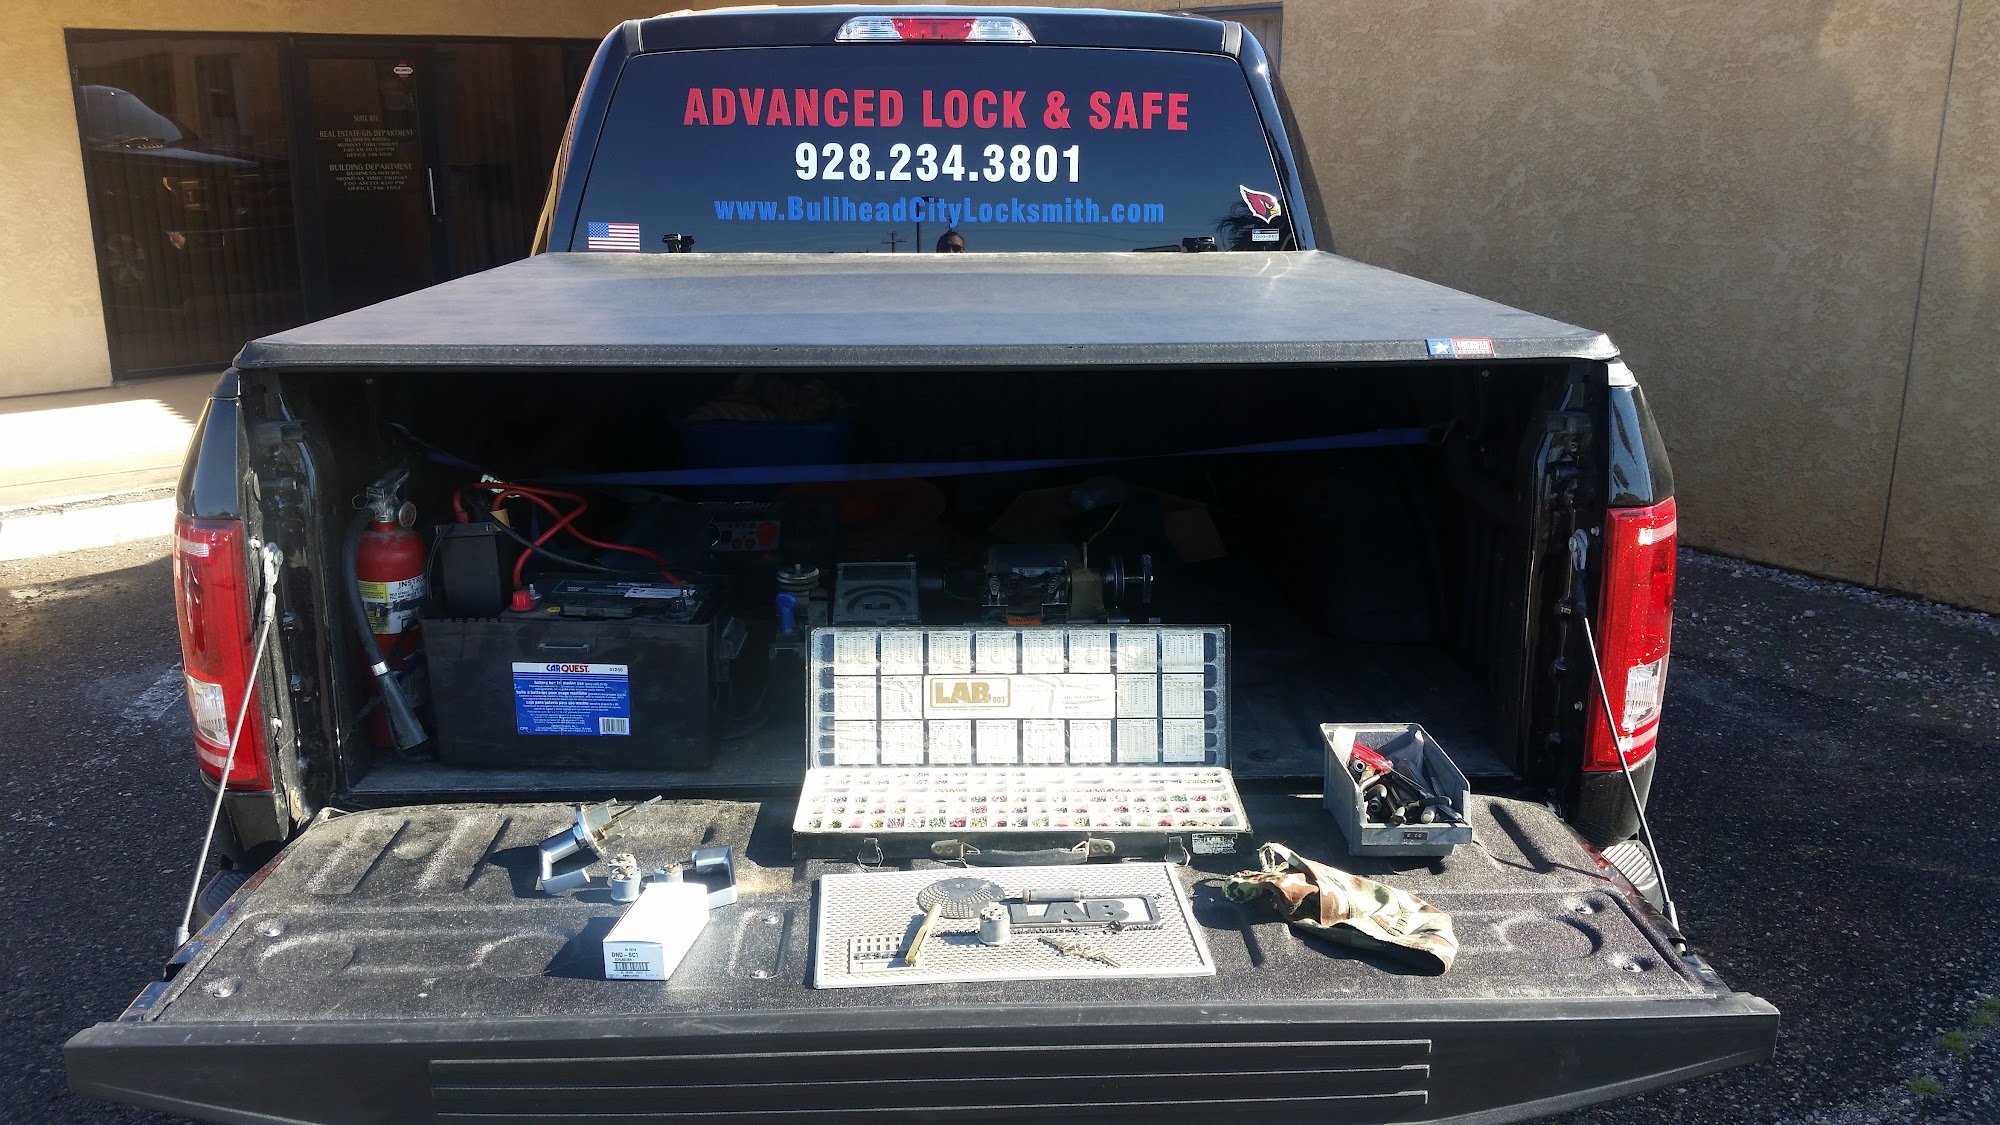 Advanced Lock & Safe